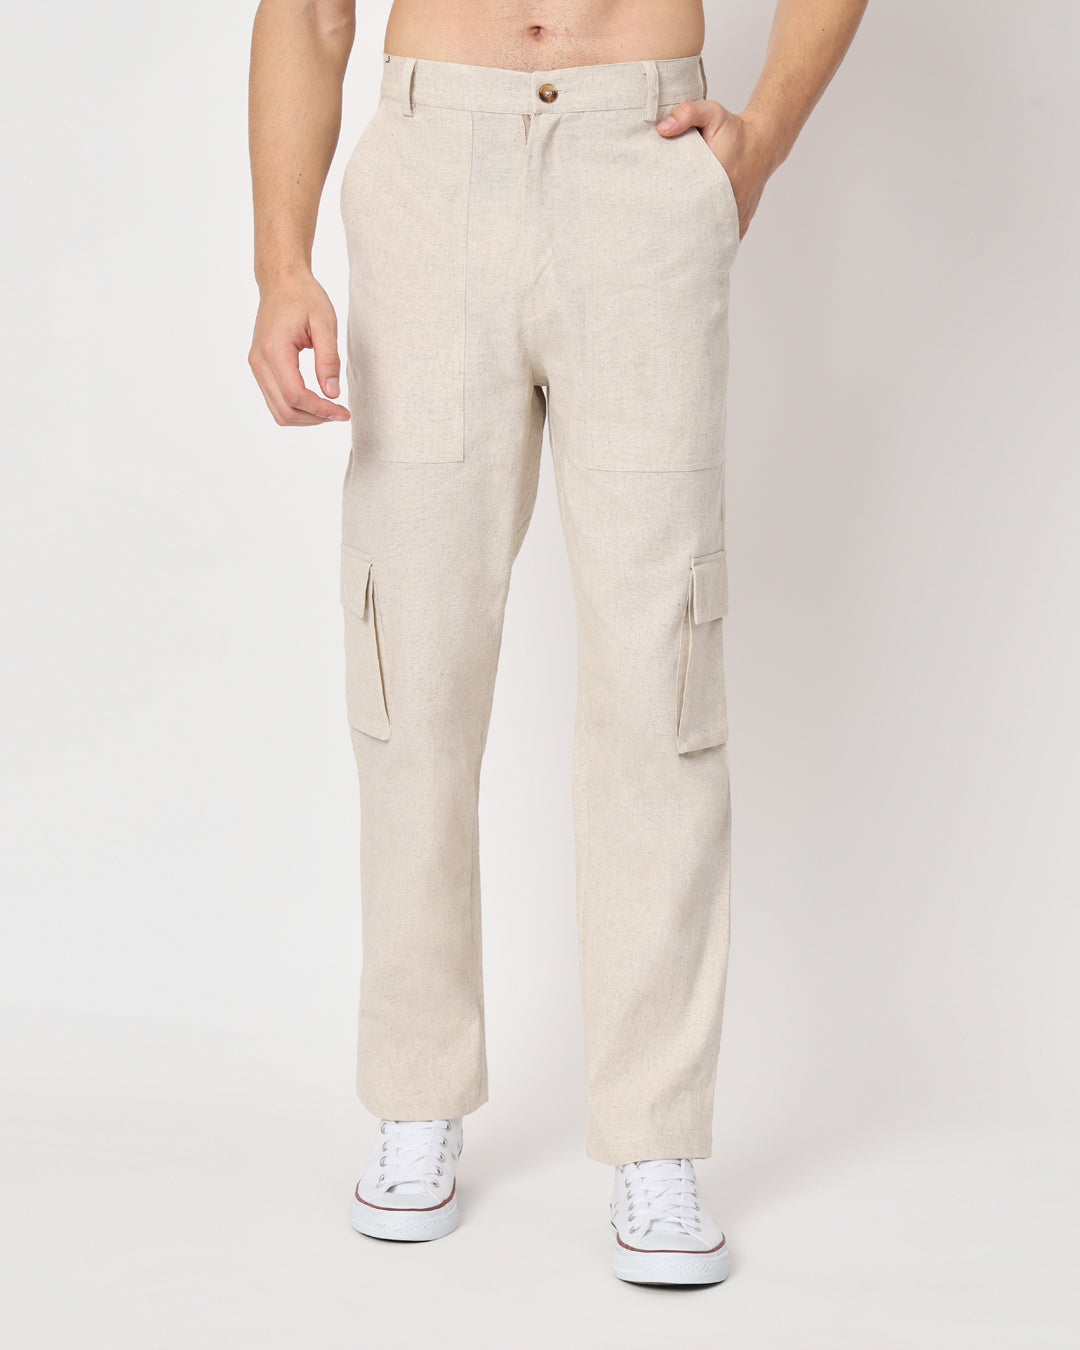 Combo: Function Flex Beige & White Men's Pants- Set Of 2